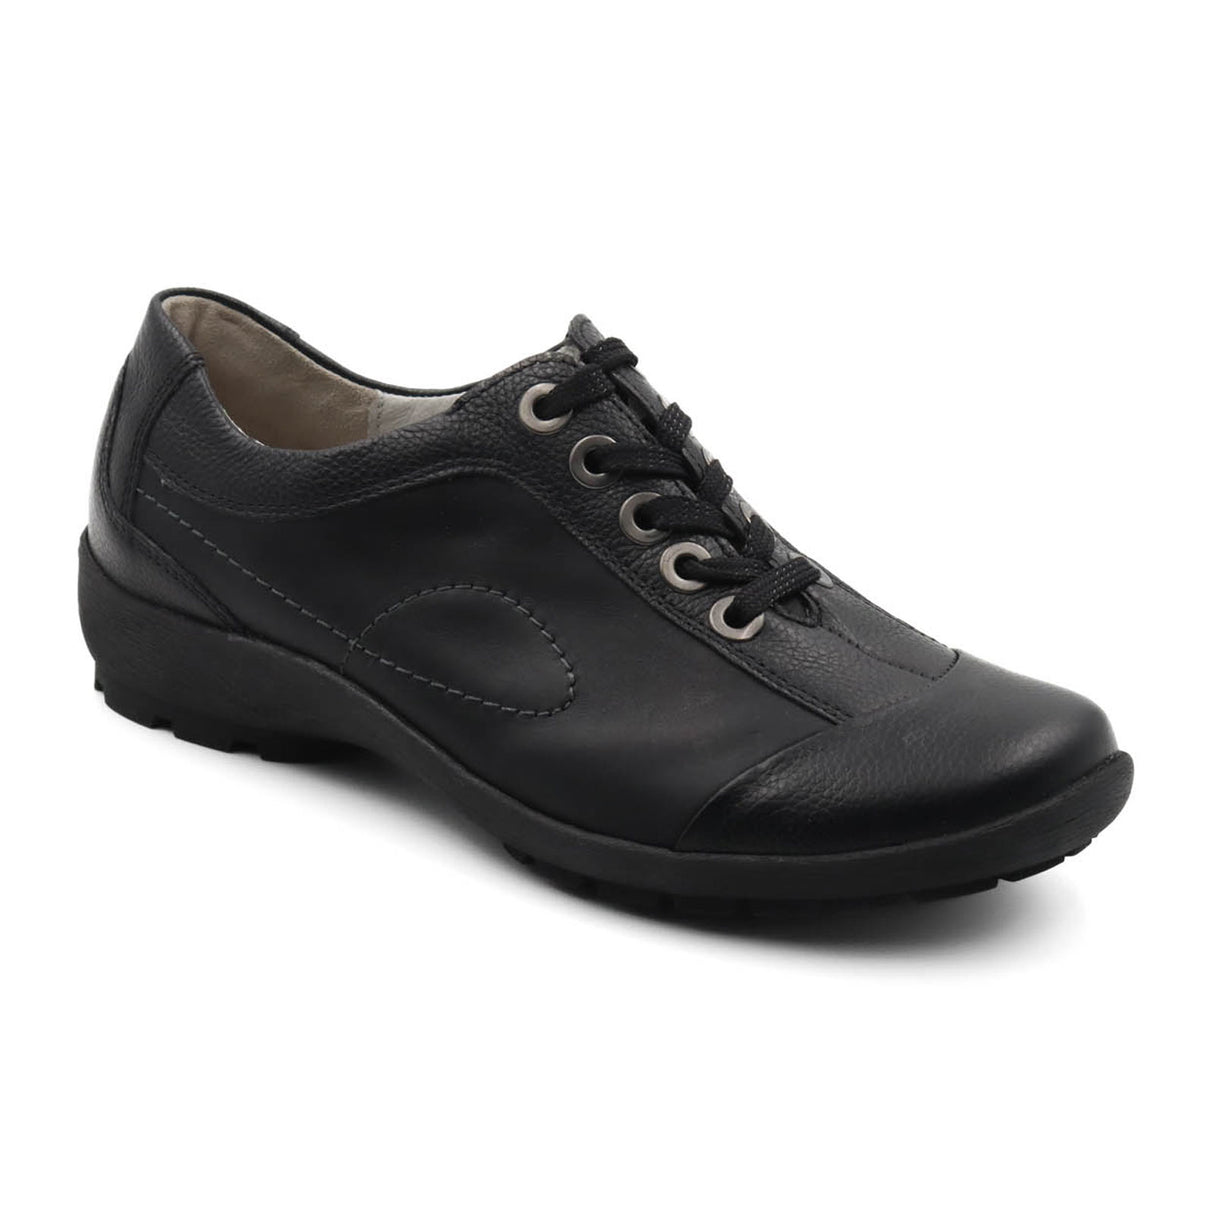 Waldlaufer Dana 589008 Lace Up (Women) - Black Leather Dress-Casual - Lace Ups - The Heel Shoe Fitters